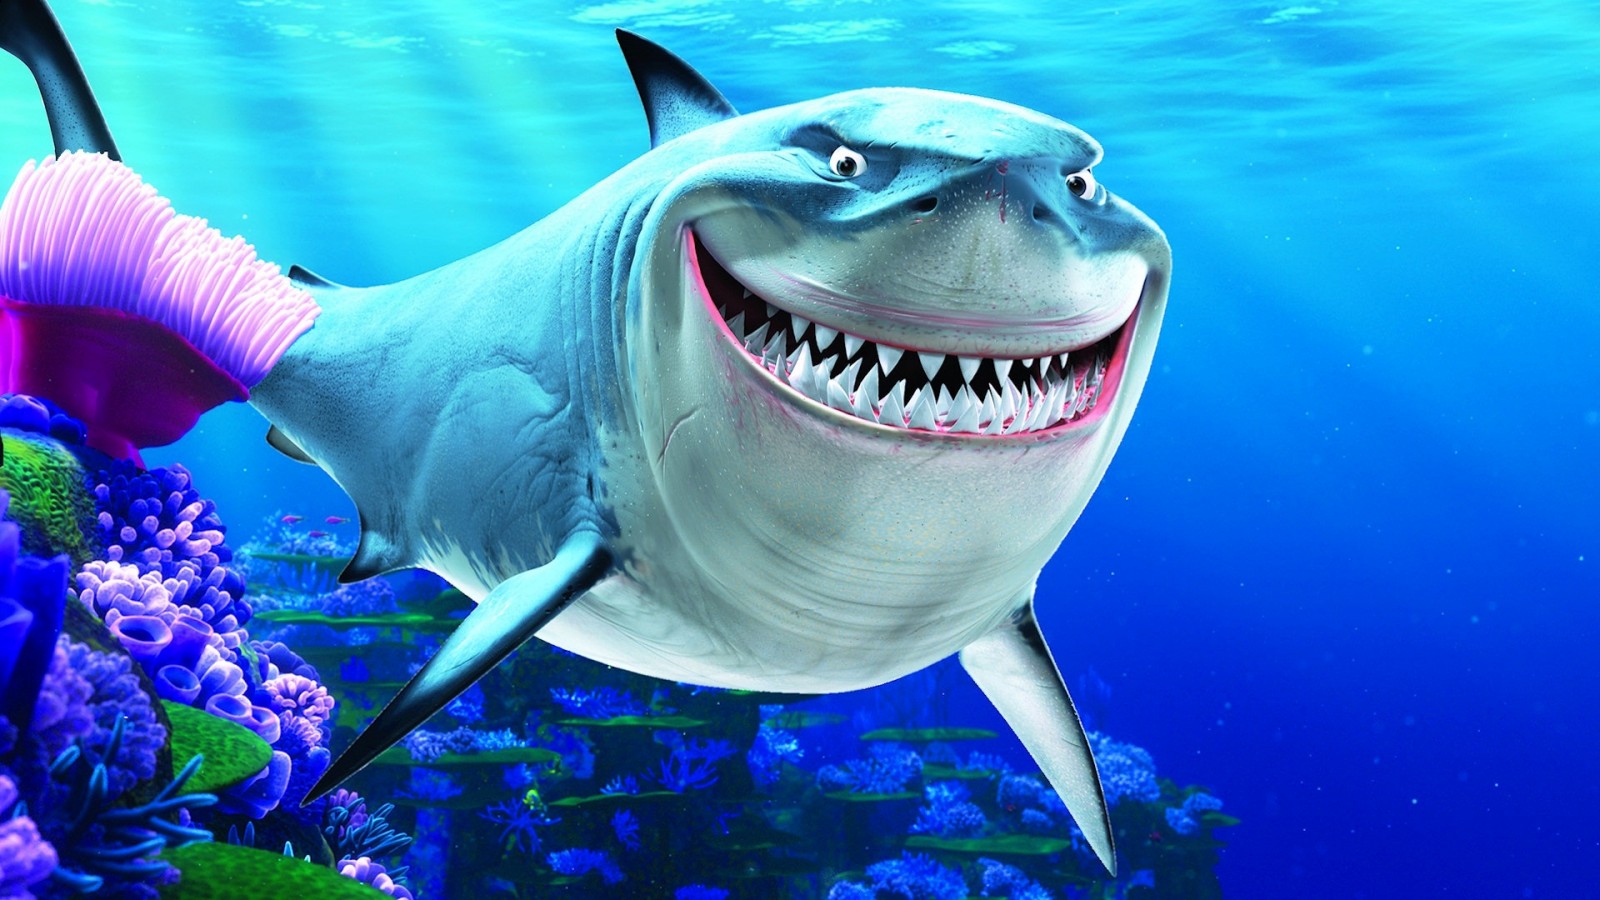 48+] Awesome Funny Shark HD Wallpaper - WallpaperSafari